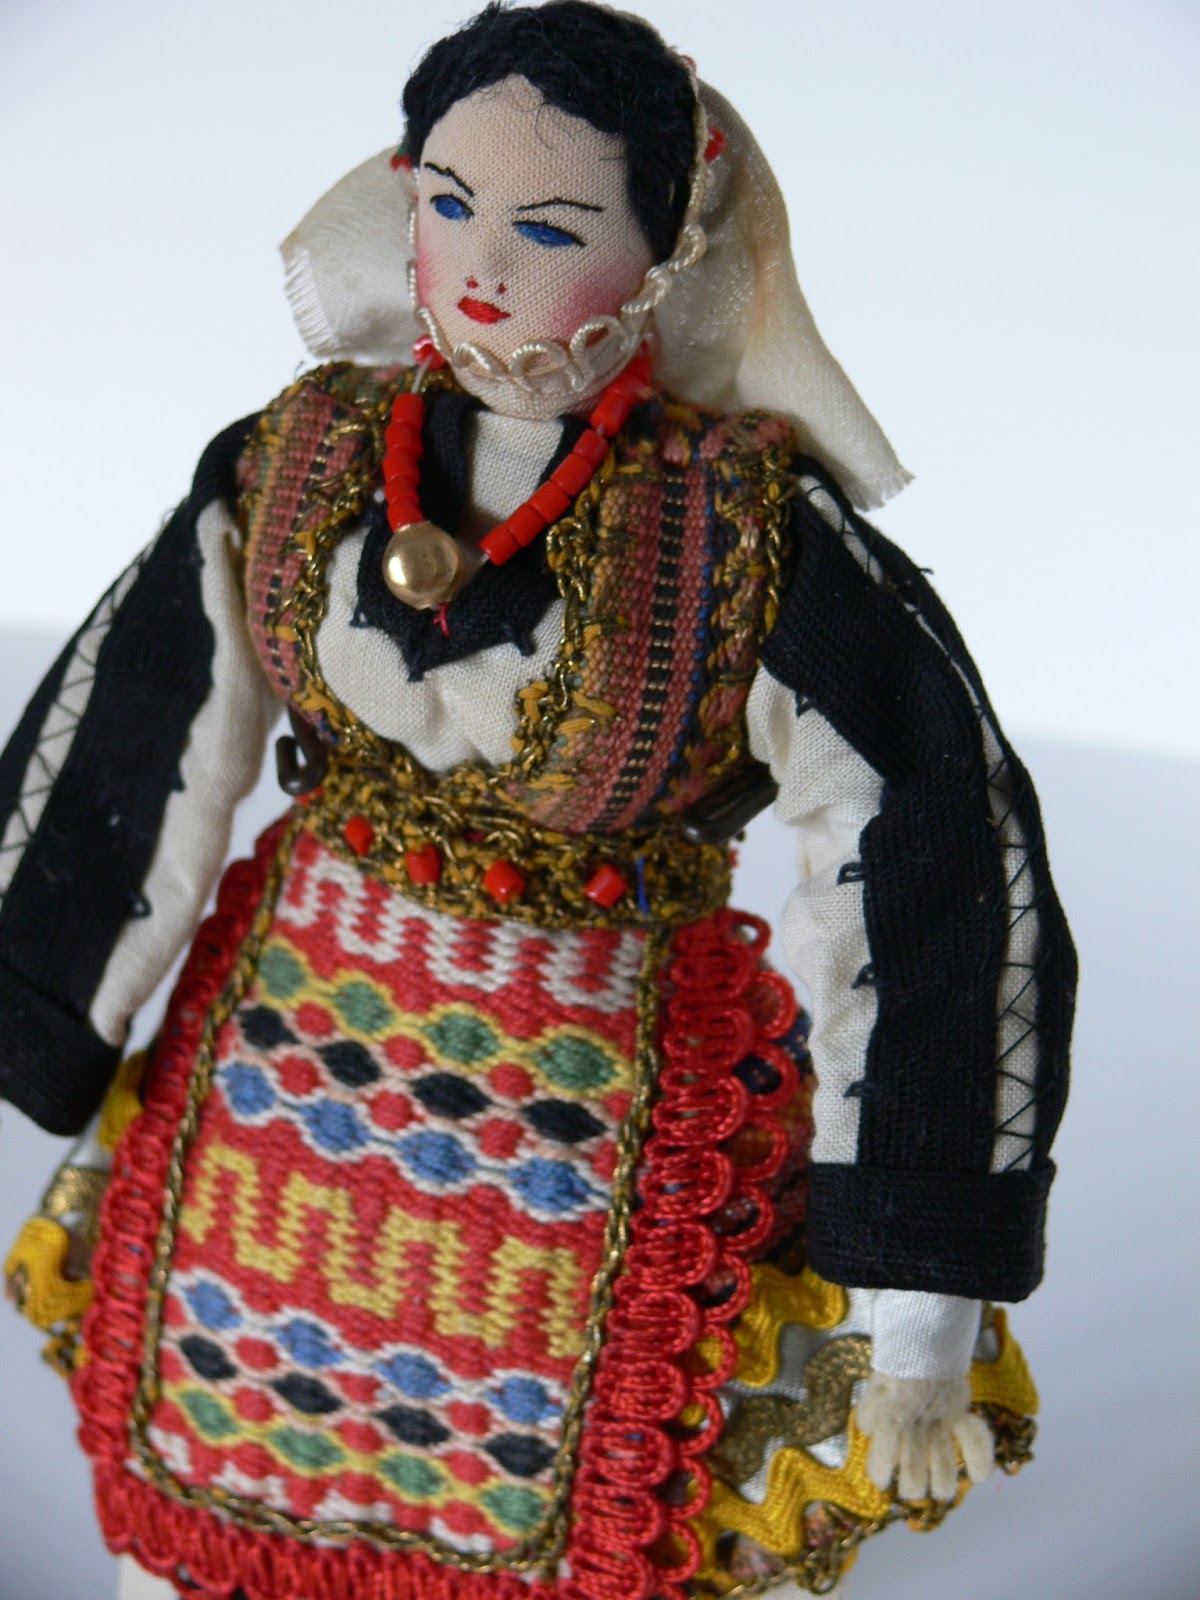 Quick Guide to Identifying your Yugoslavian folk doll